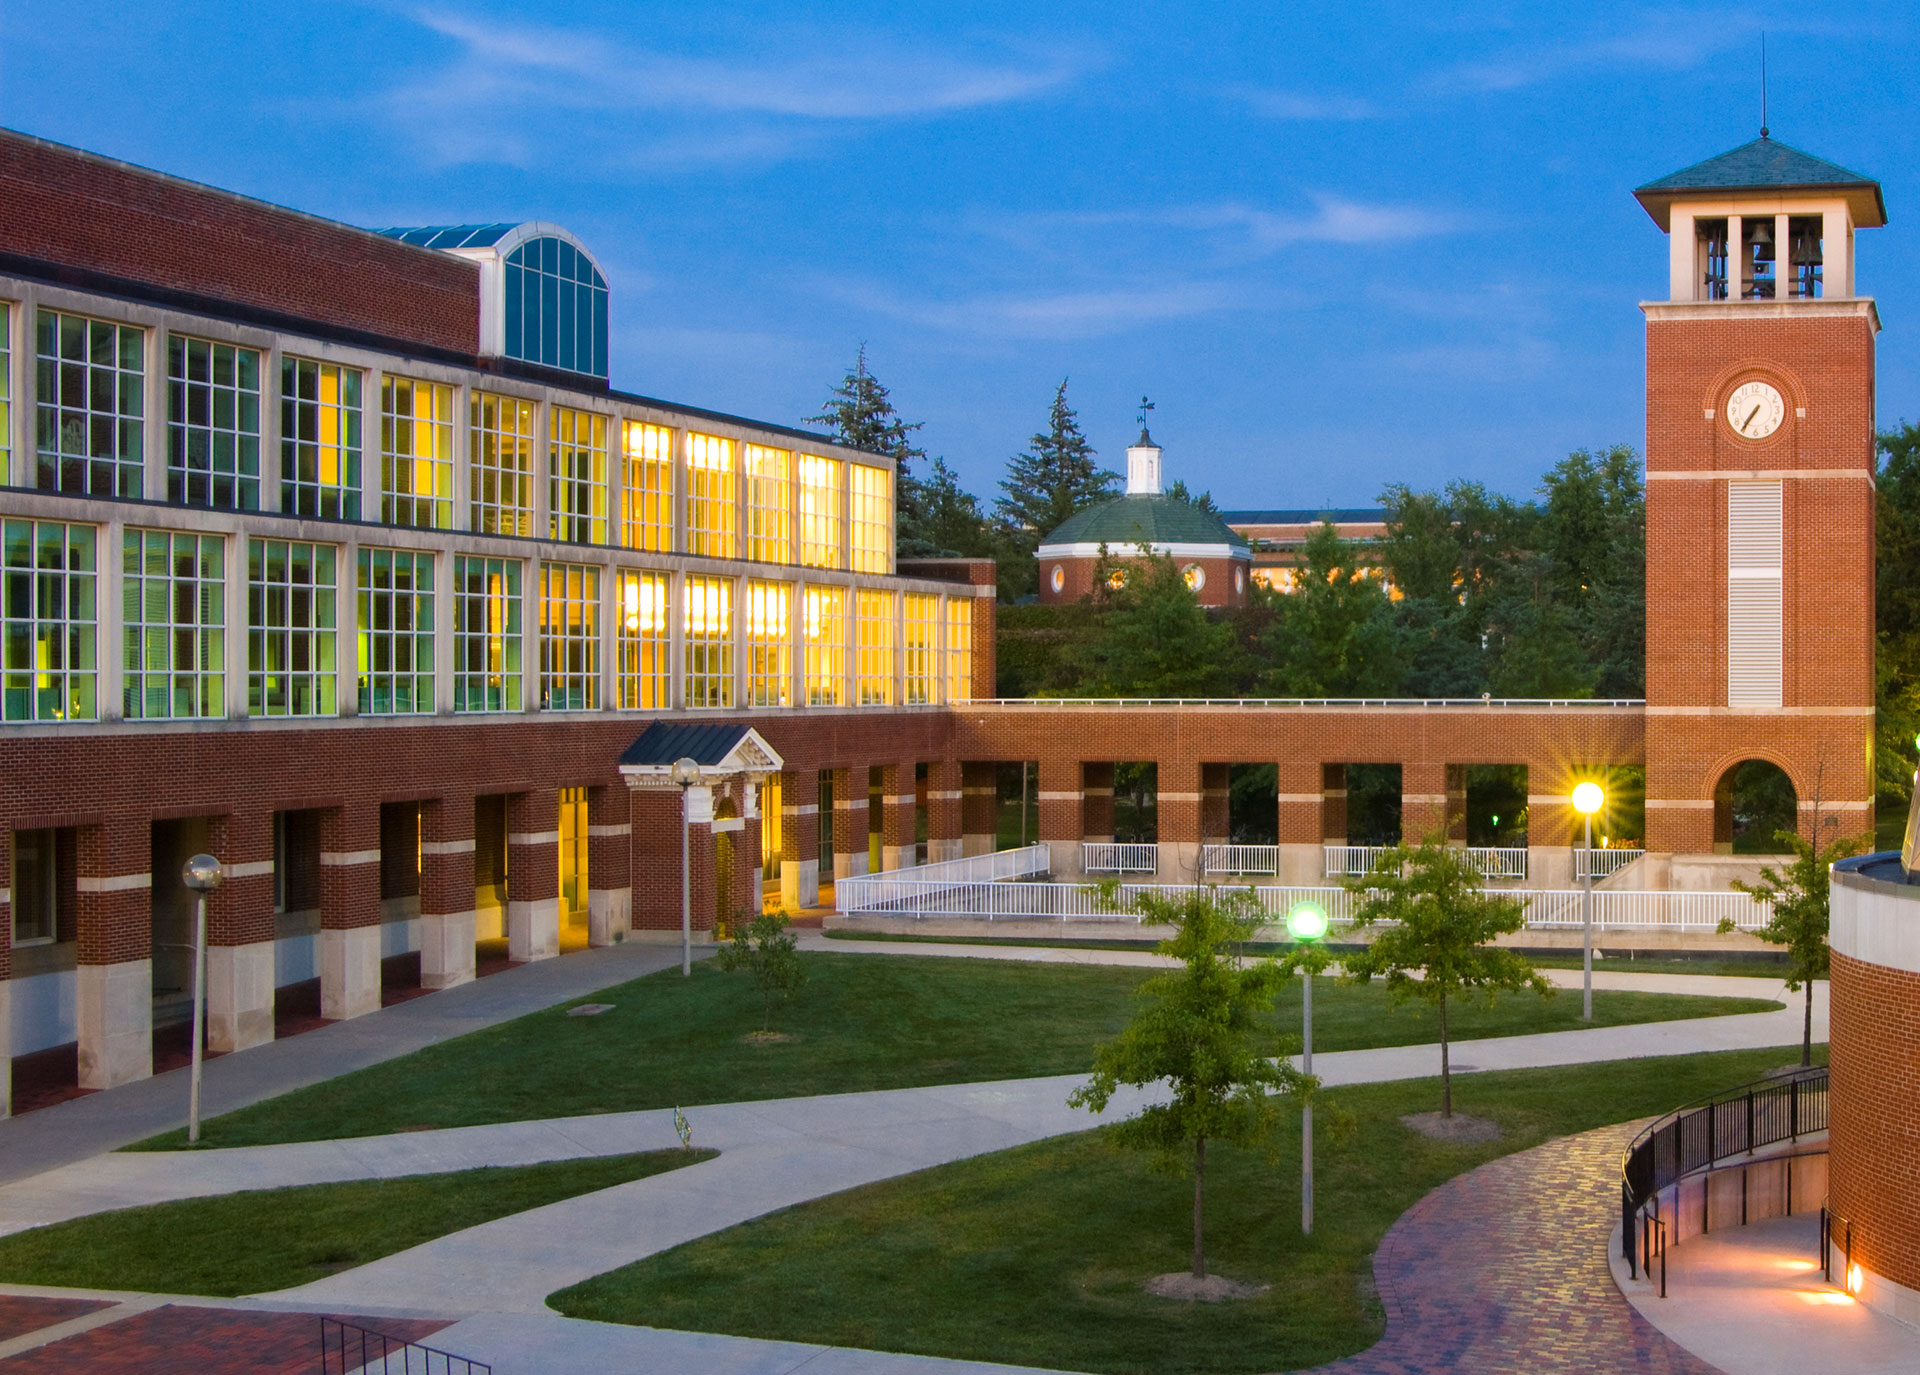 The Truman State University Campus